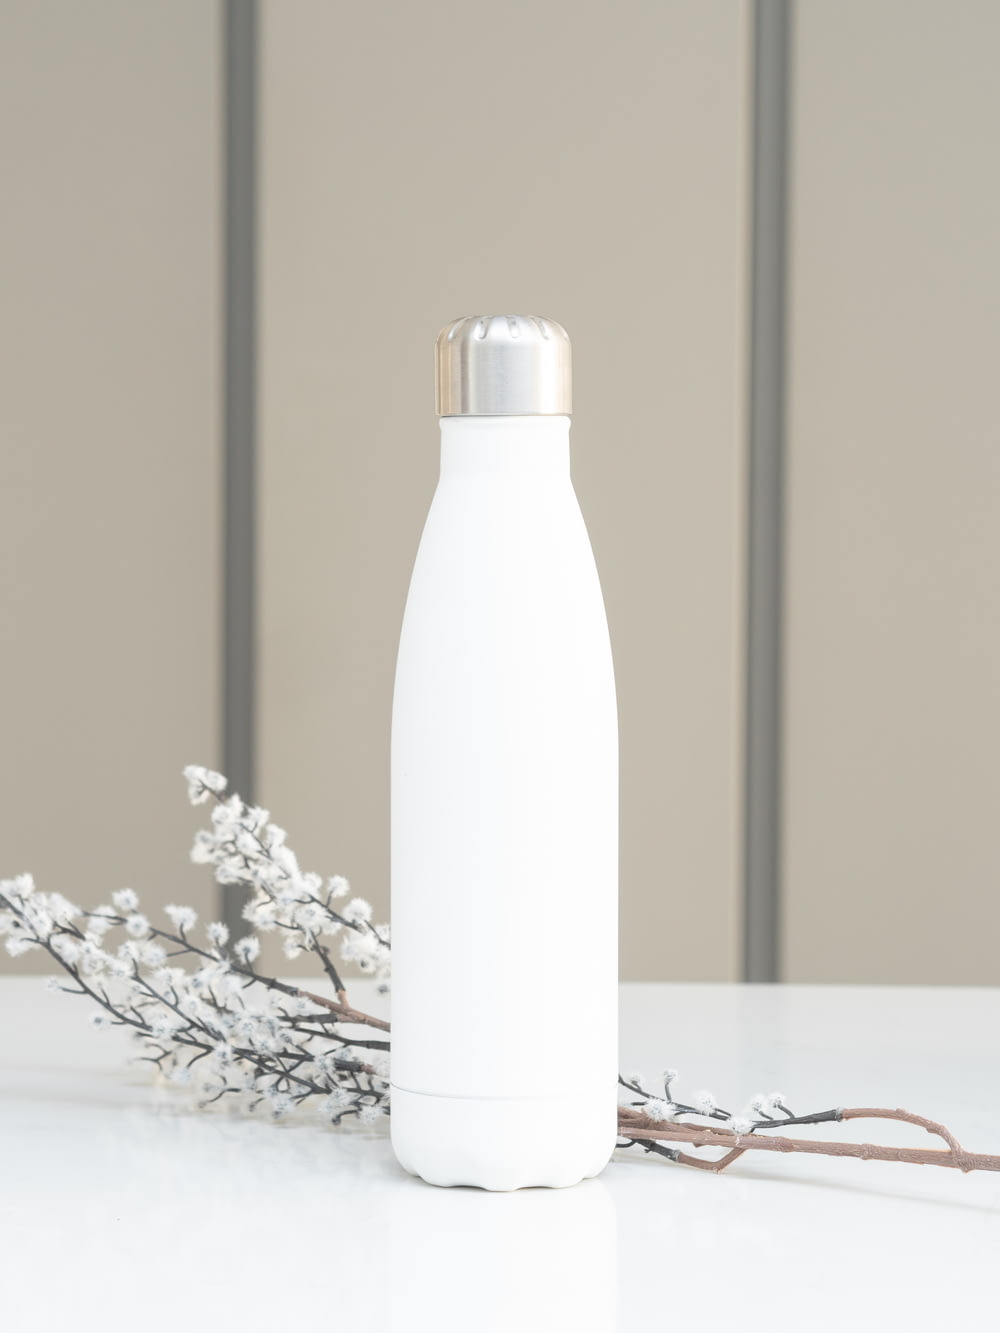 white bottle on white table